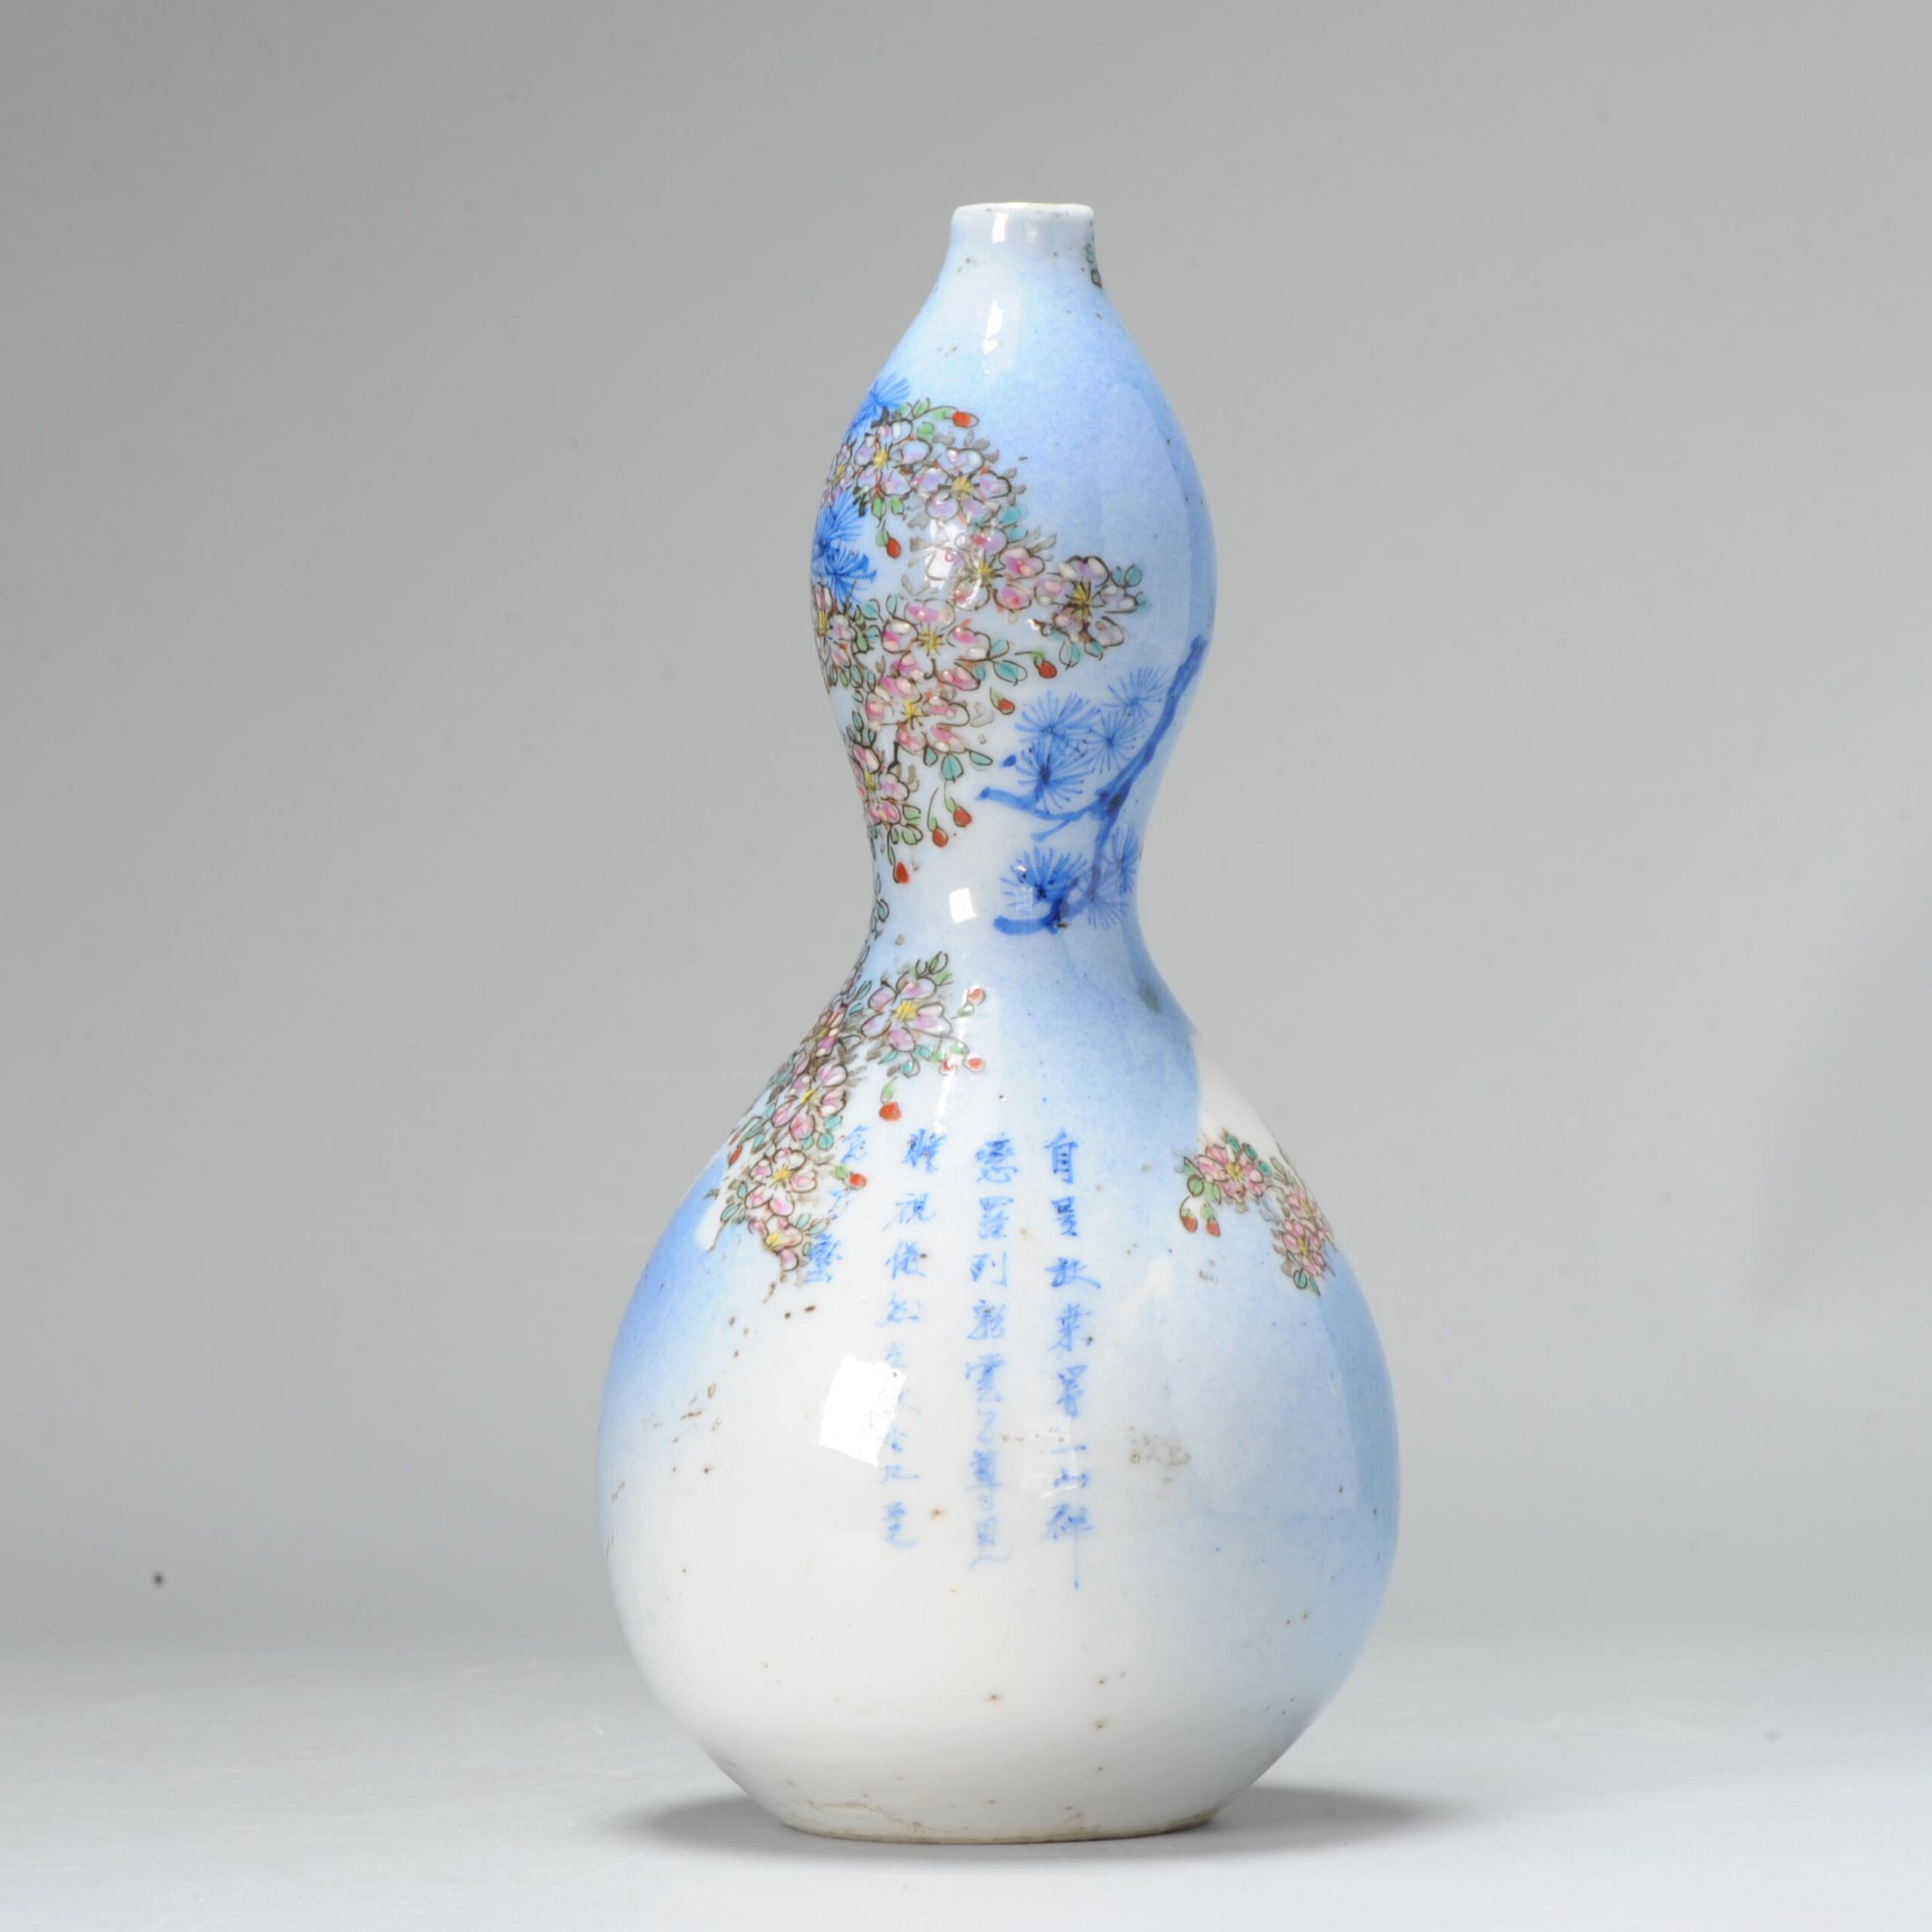 Antique Meiji period Japanese Vase 19th century Blue and White